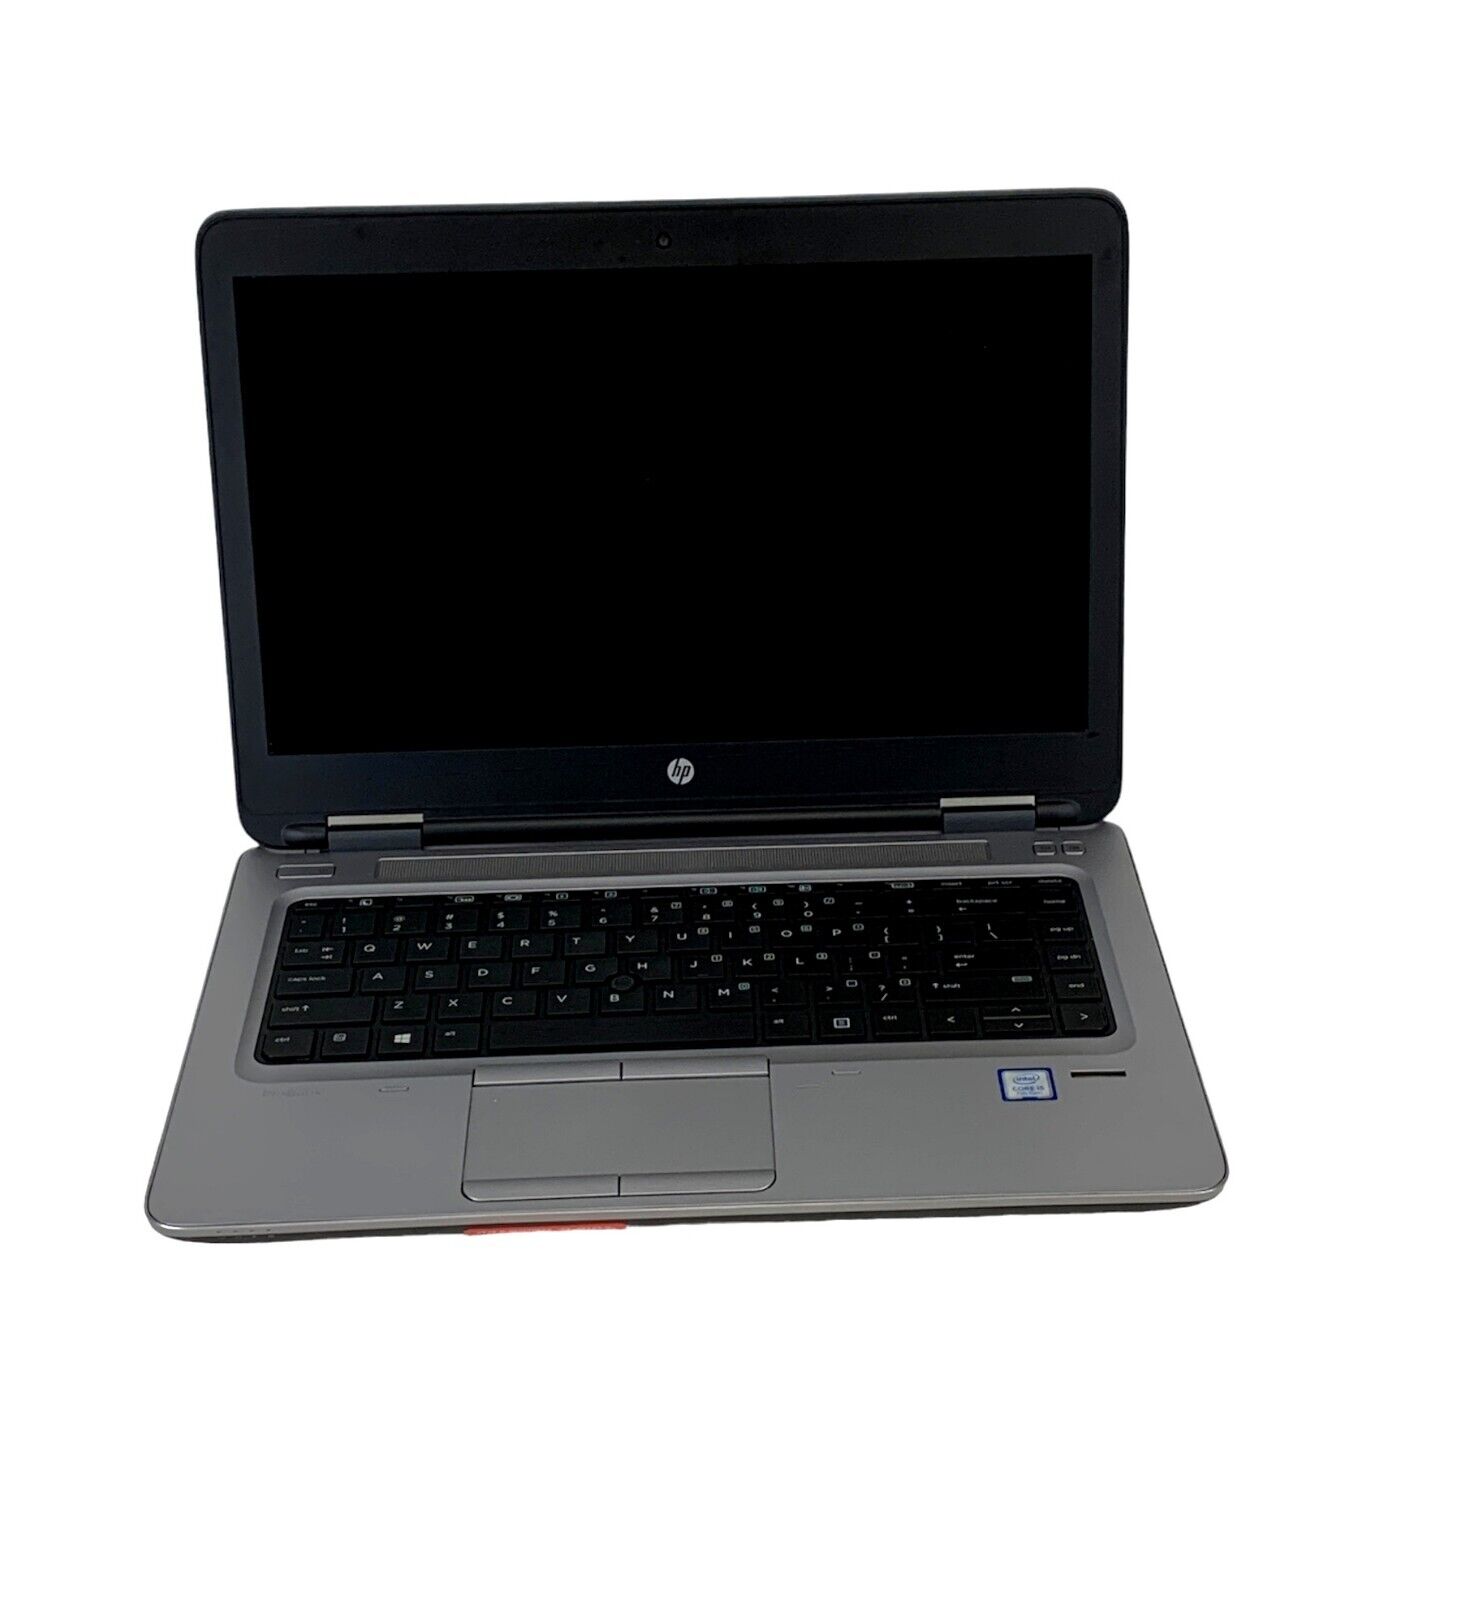 HP ProBook 640 G3 Laptop i5 7200U 2.50 GHz 16 GB RAM 256 GB SSD W10P (Very Good)